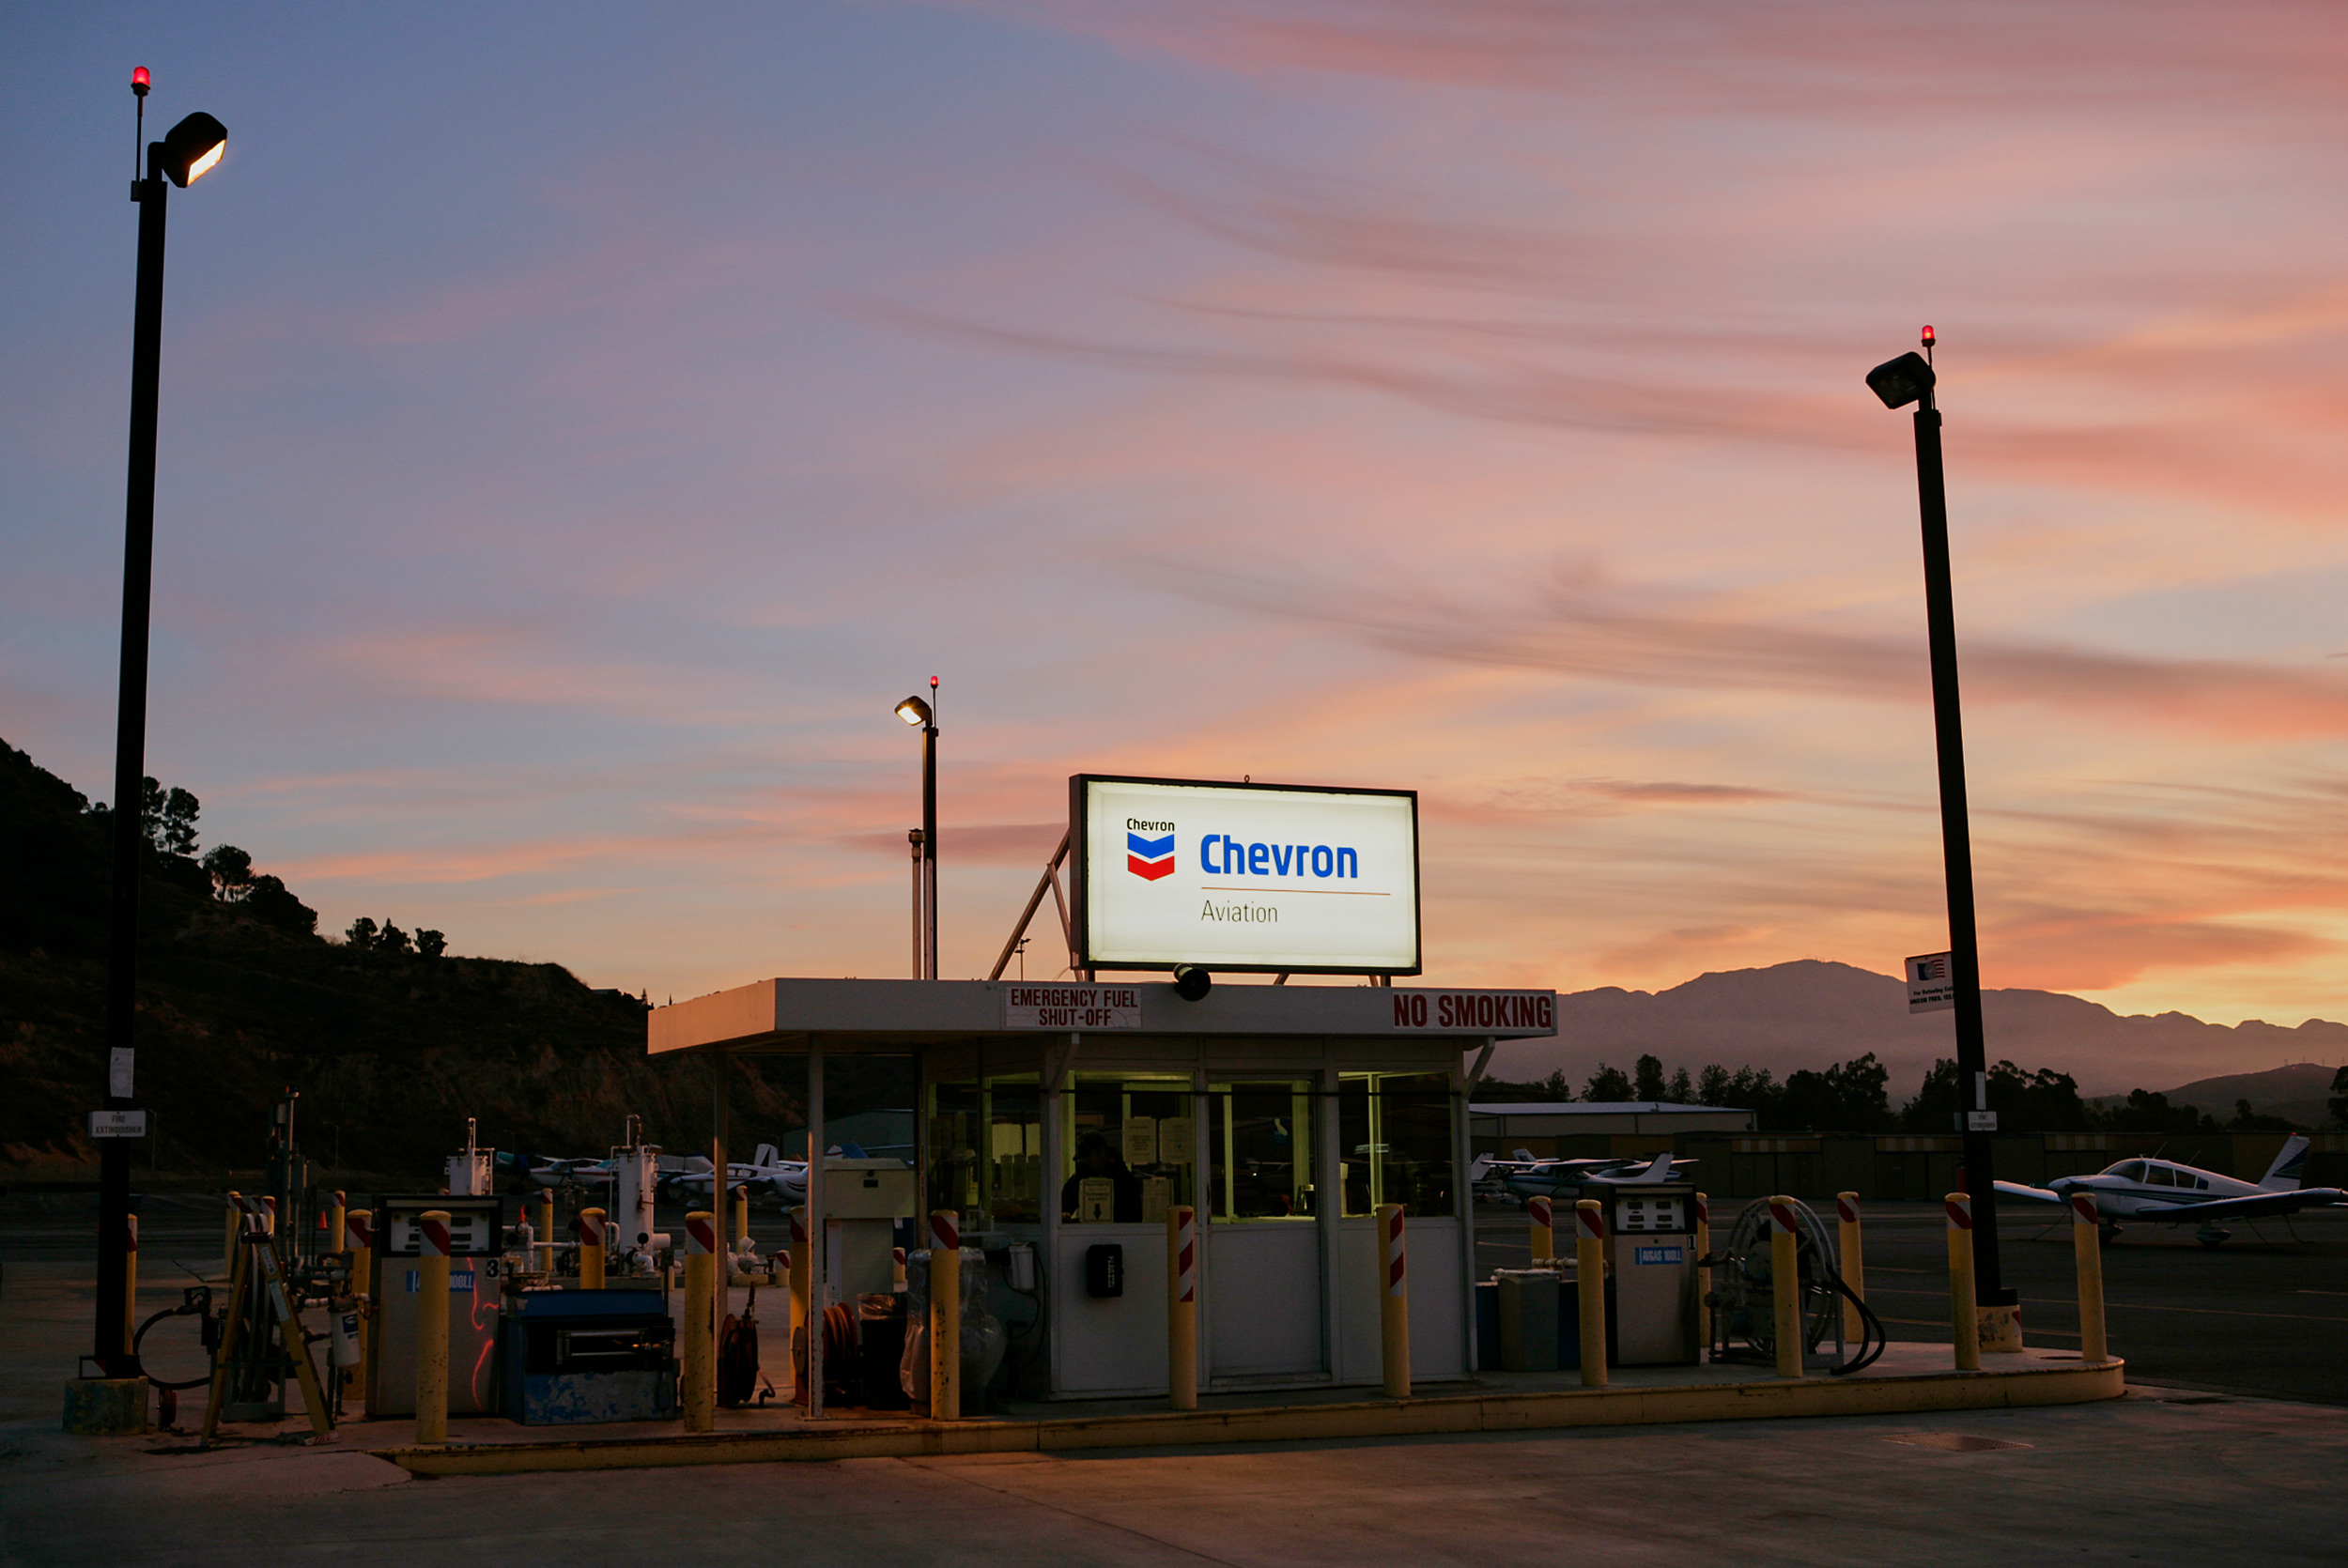 Chevron Aviation Sunrise - Steve Craft Photography, Phoenix, Arizona based Commercial, Aviation & Editorial Photographer